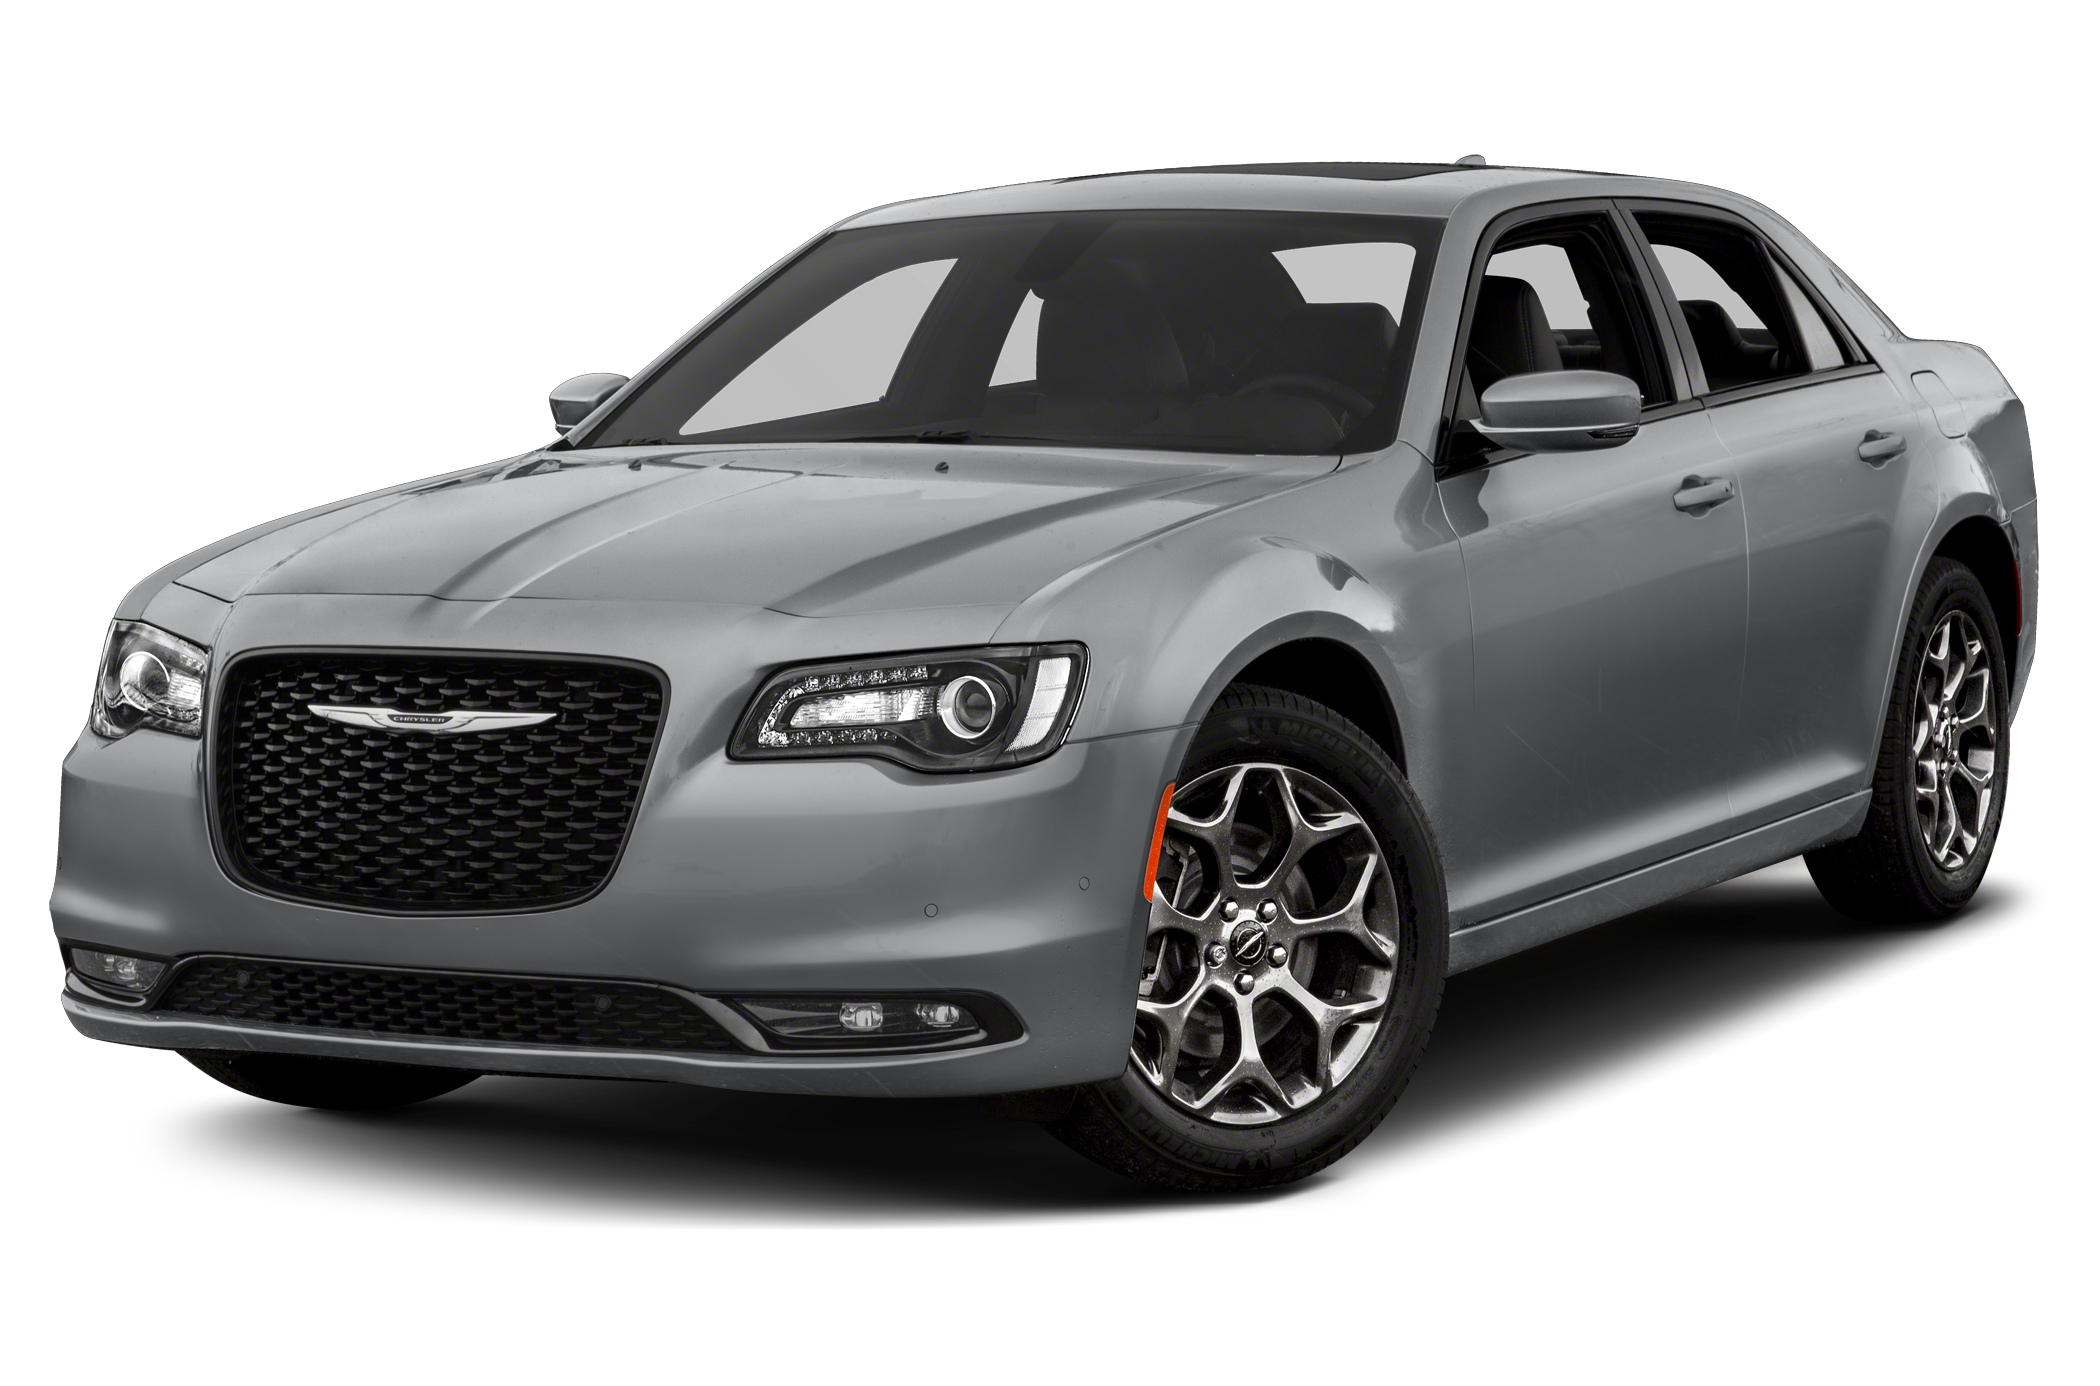 Used 2015 Chrysler 300 for Sale Near Me | Cars.com